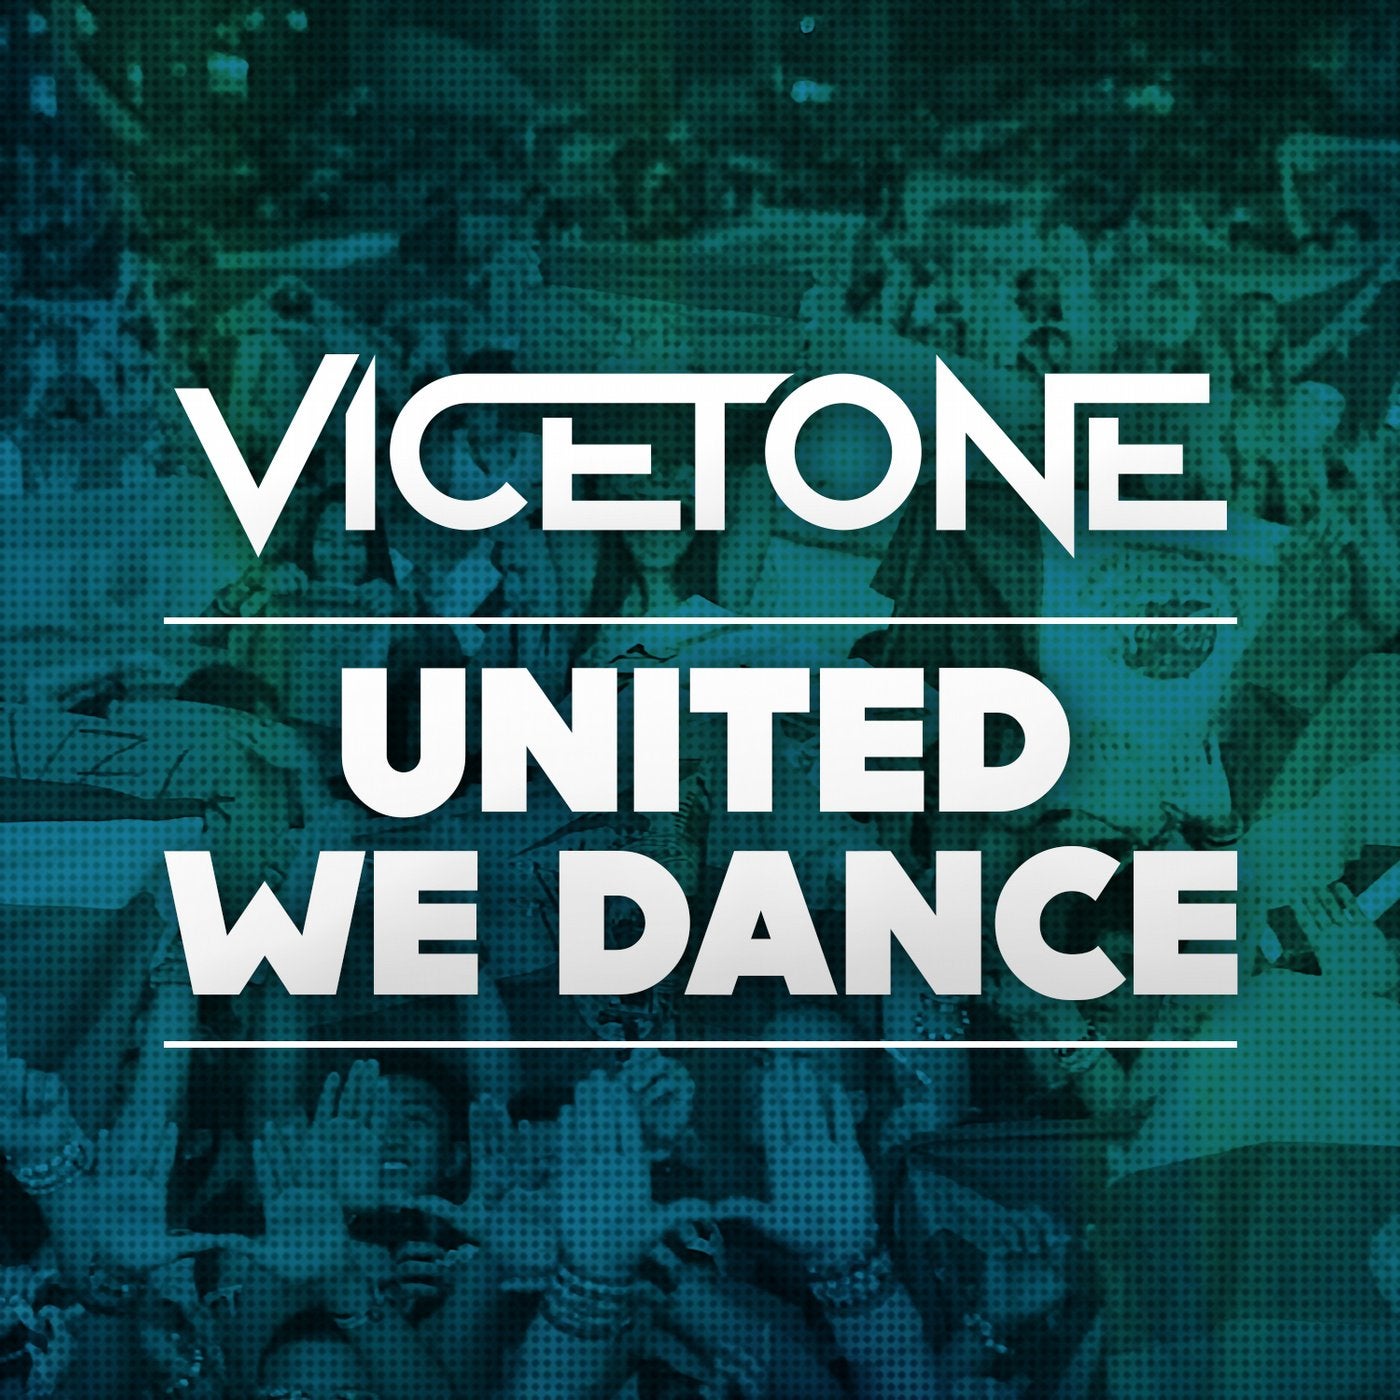 Vicetone united we dance mp3 torrent ez torrent tv